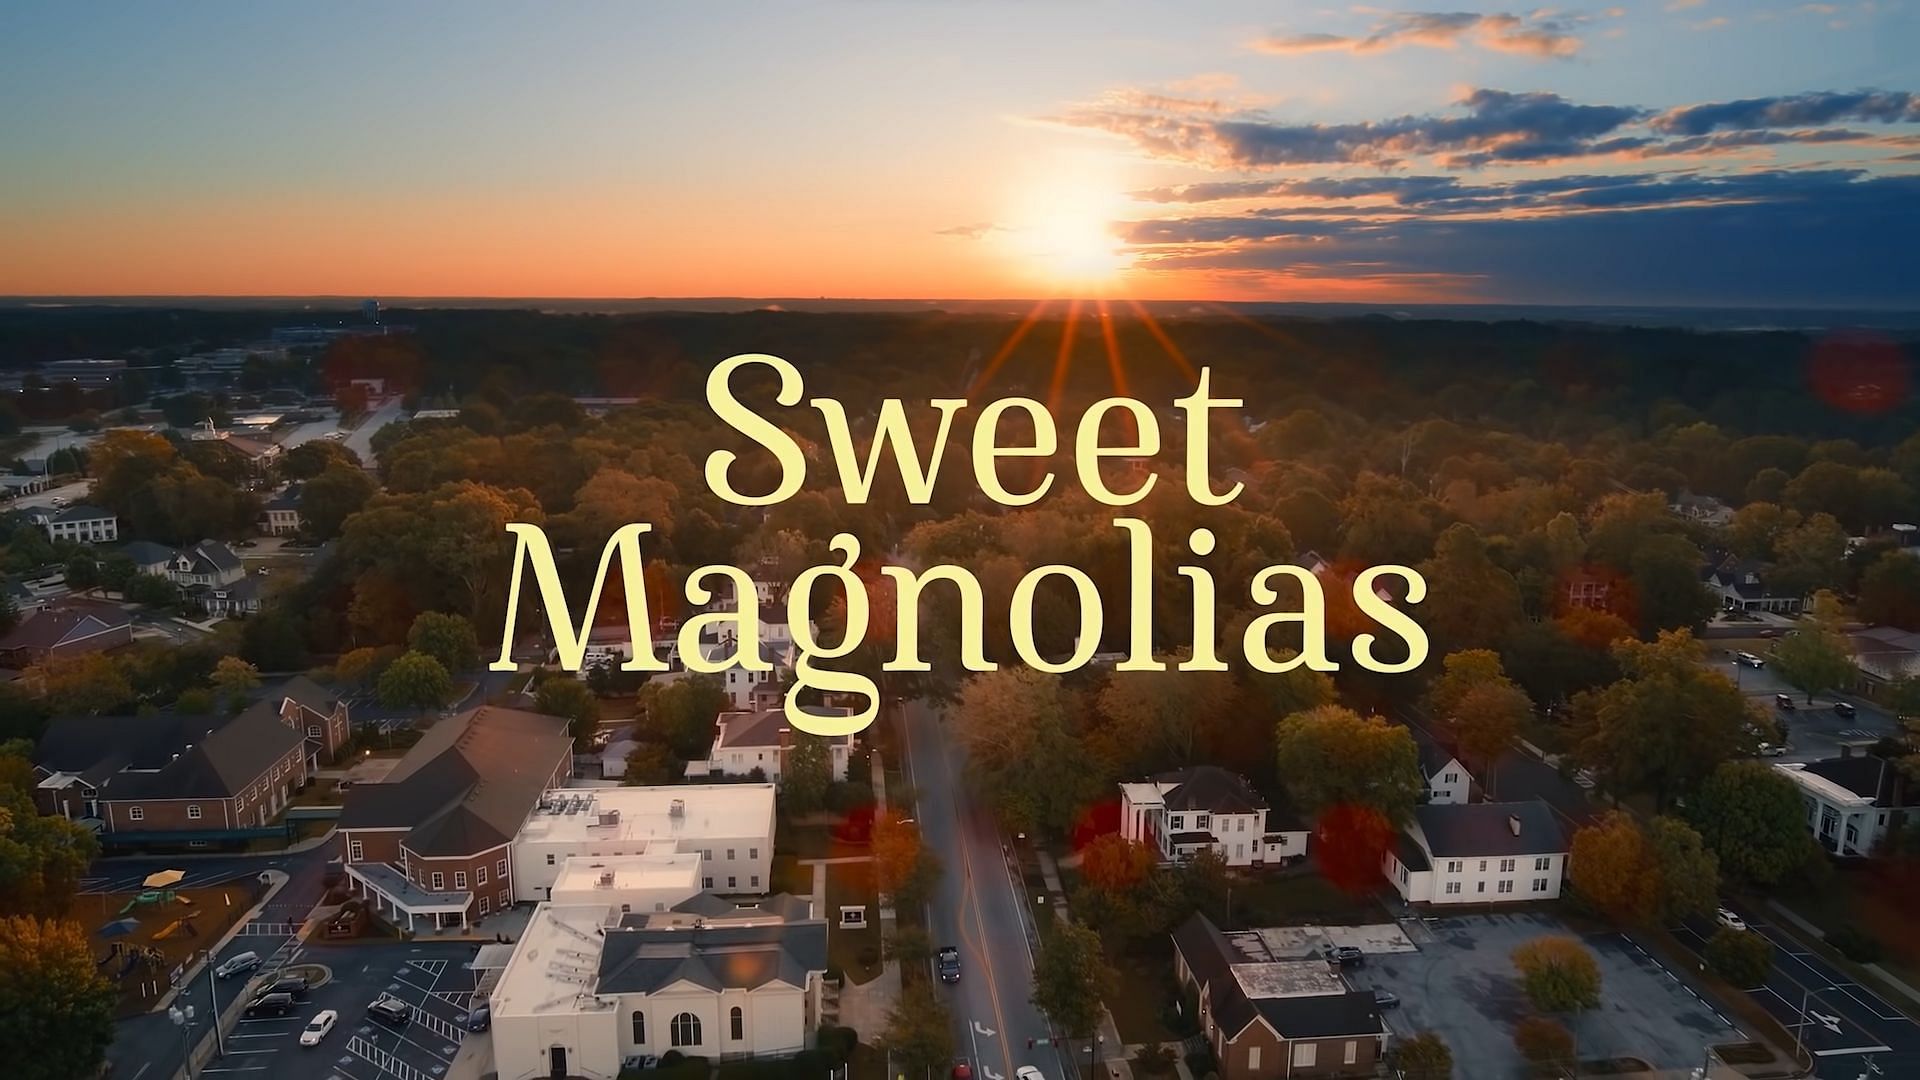 Sweet Magnolias Season 2 (Image via Netflix)